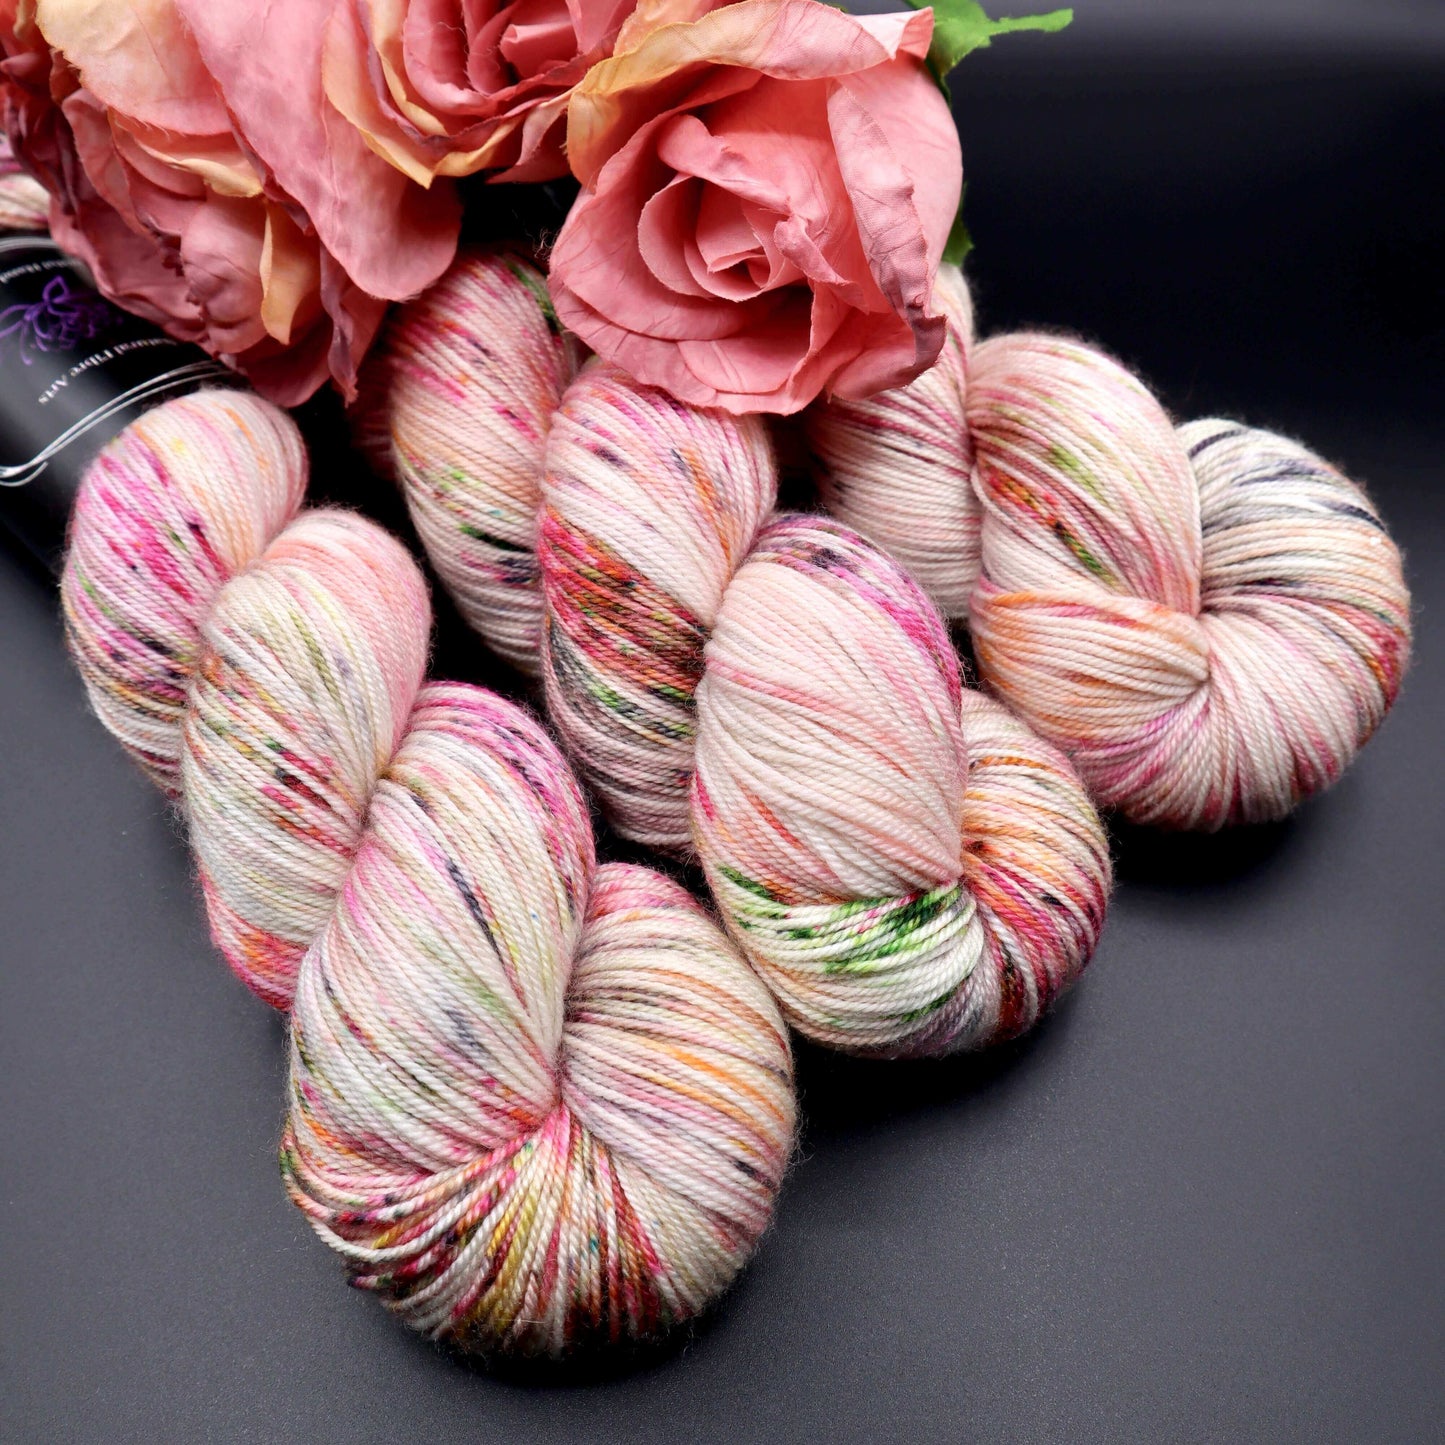 Blossom Time Shawl Kit - Yarn & Pattern - Natural Fibre Arts